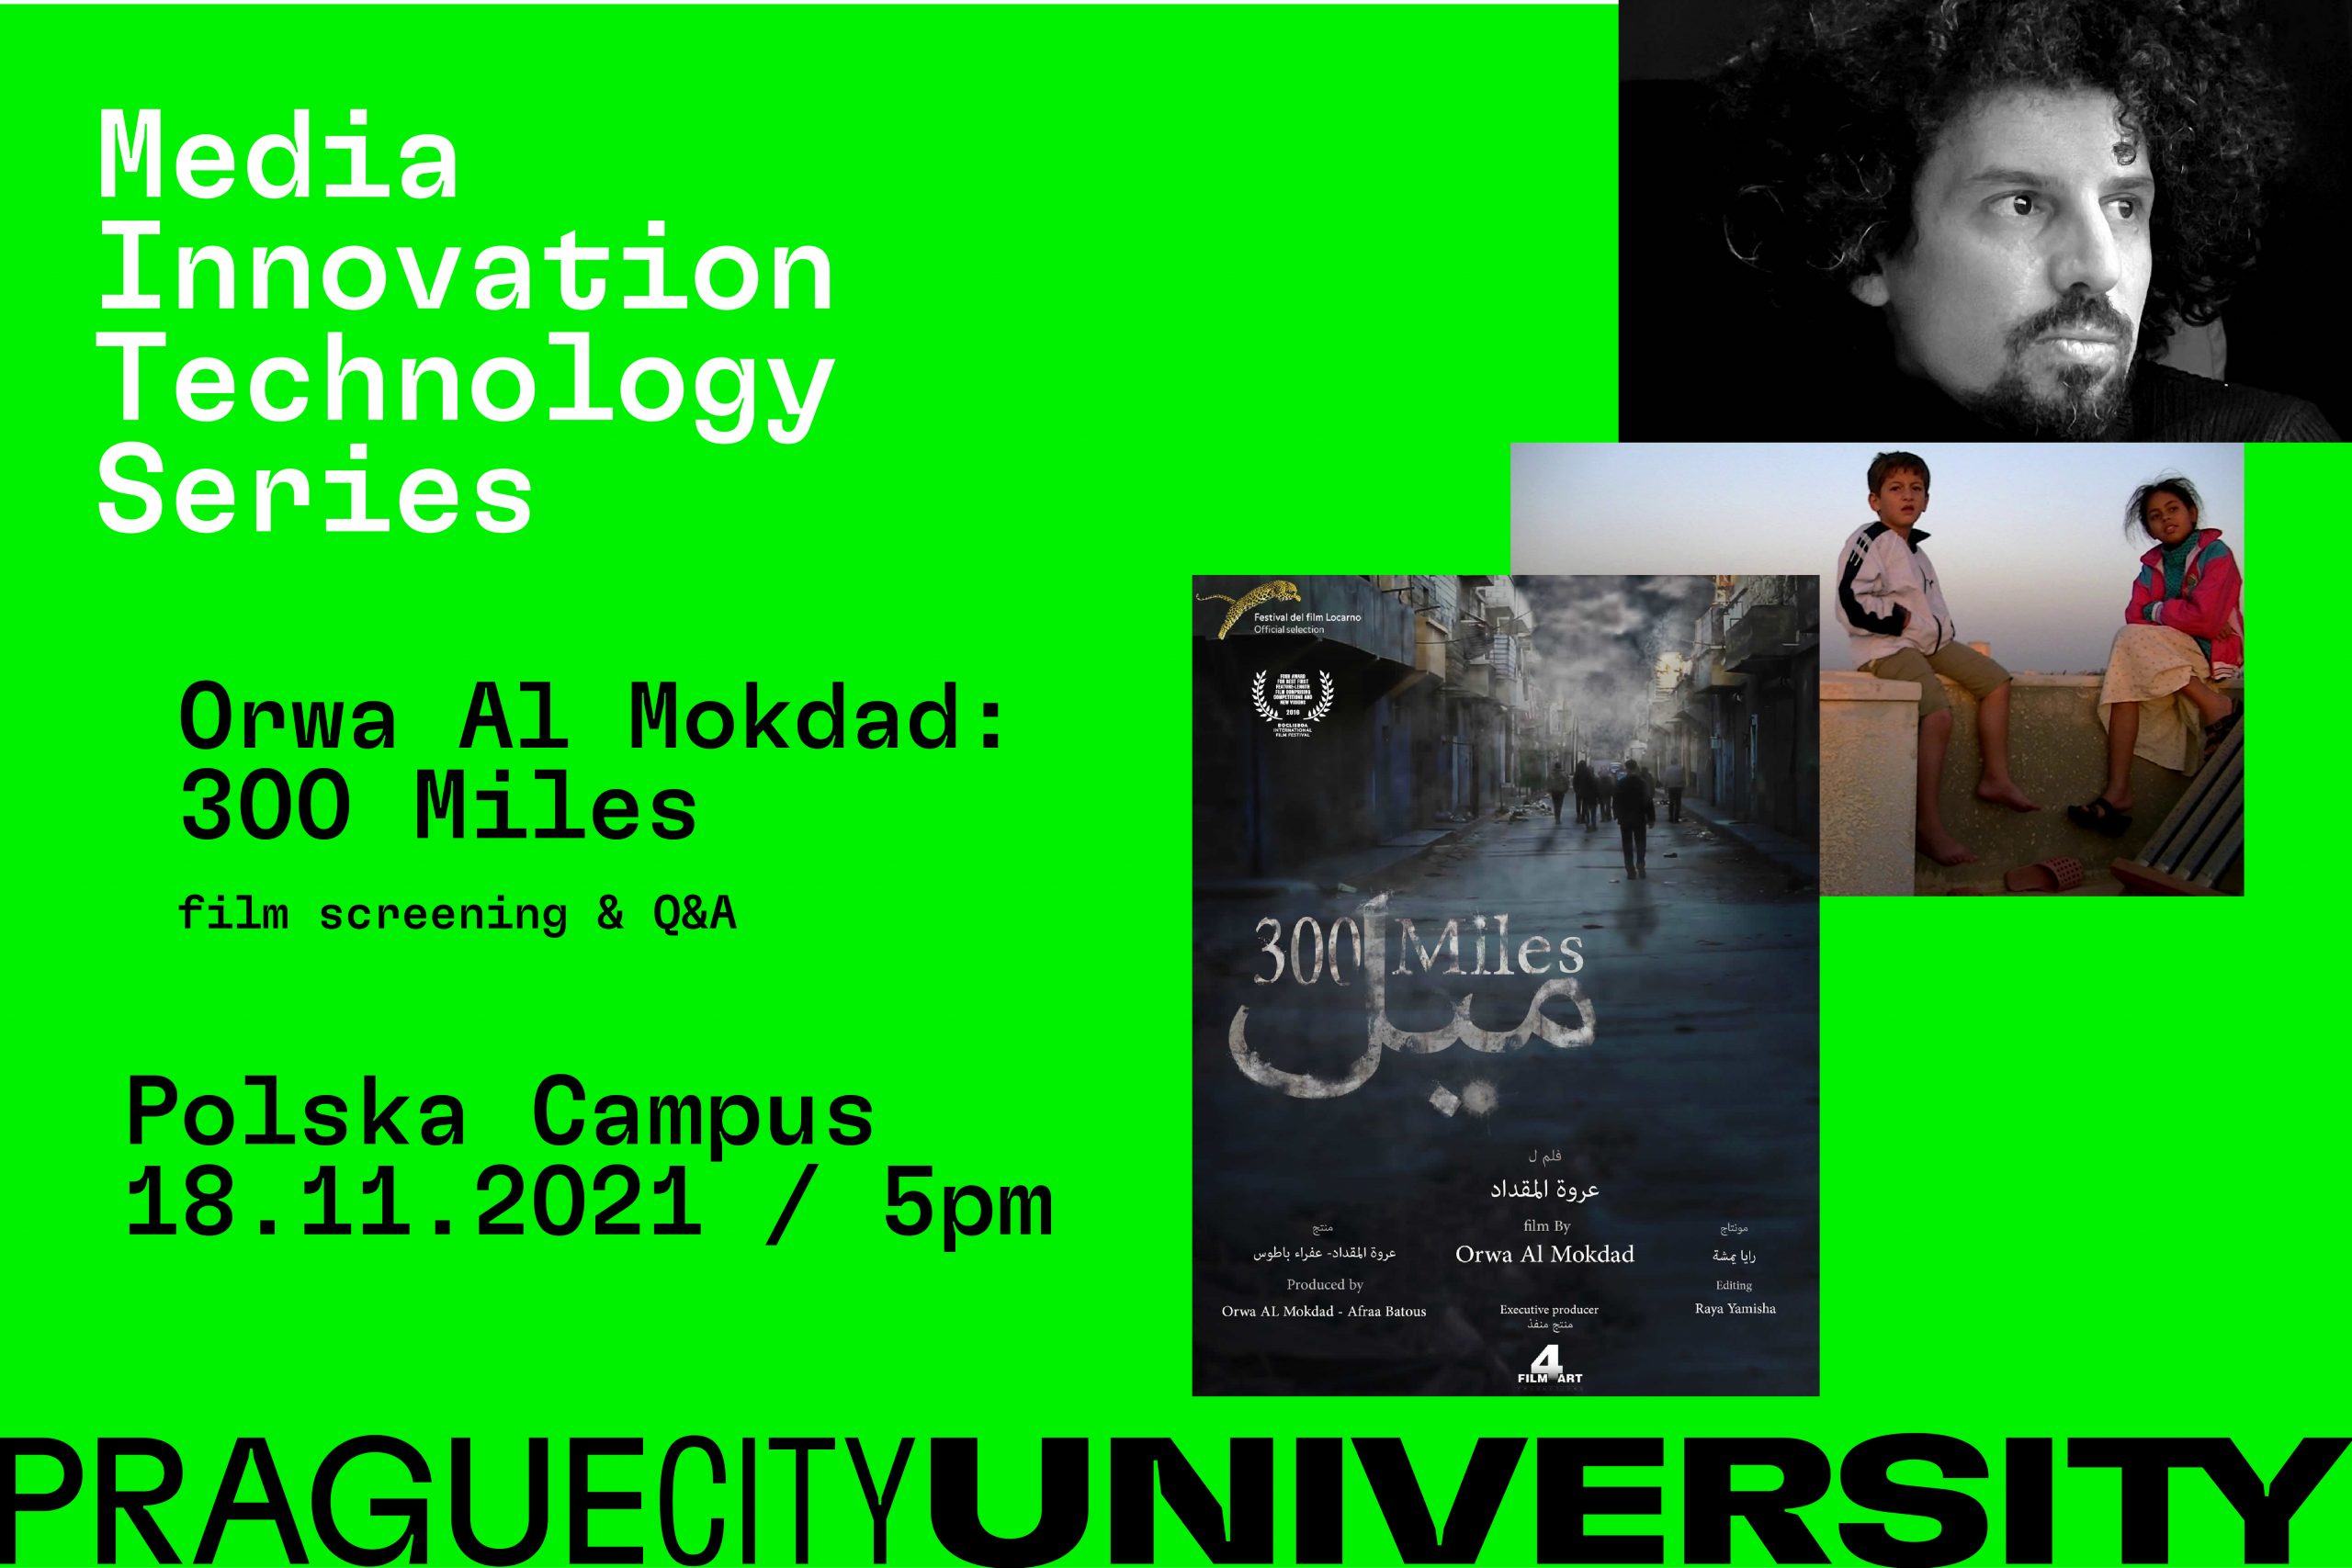 Media Innovation Technology Series Orwa Al Mokdad